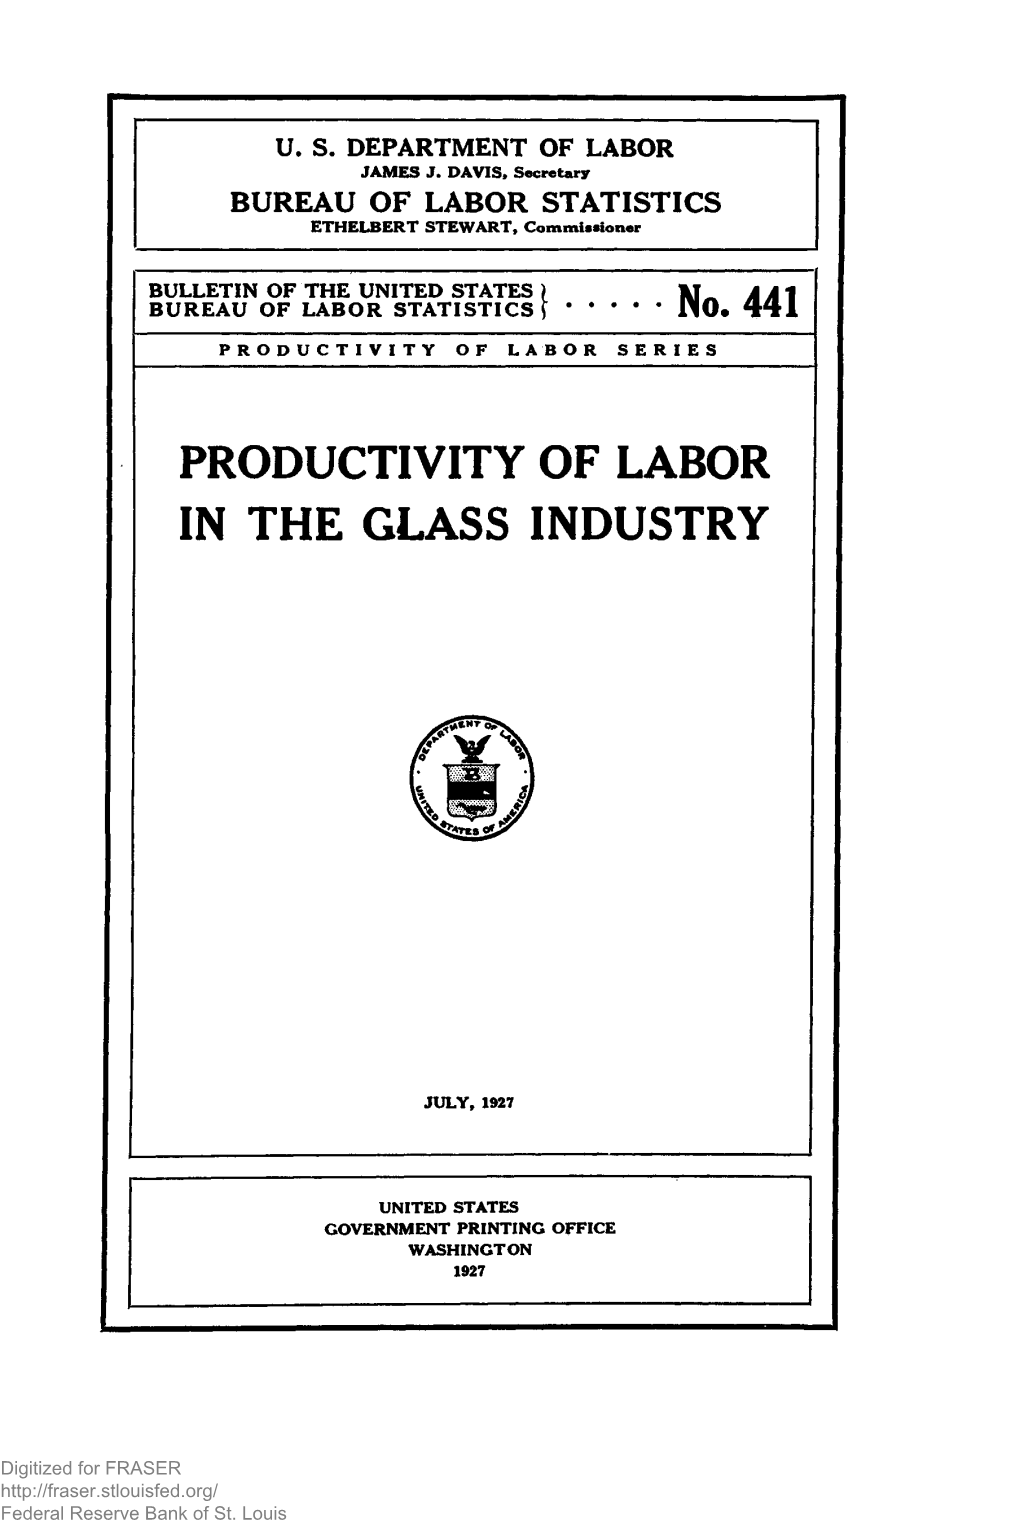 Bulletin of the United States Bureau of Labor Statistics, No